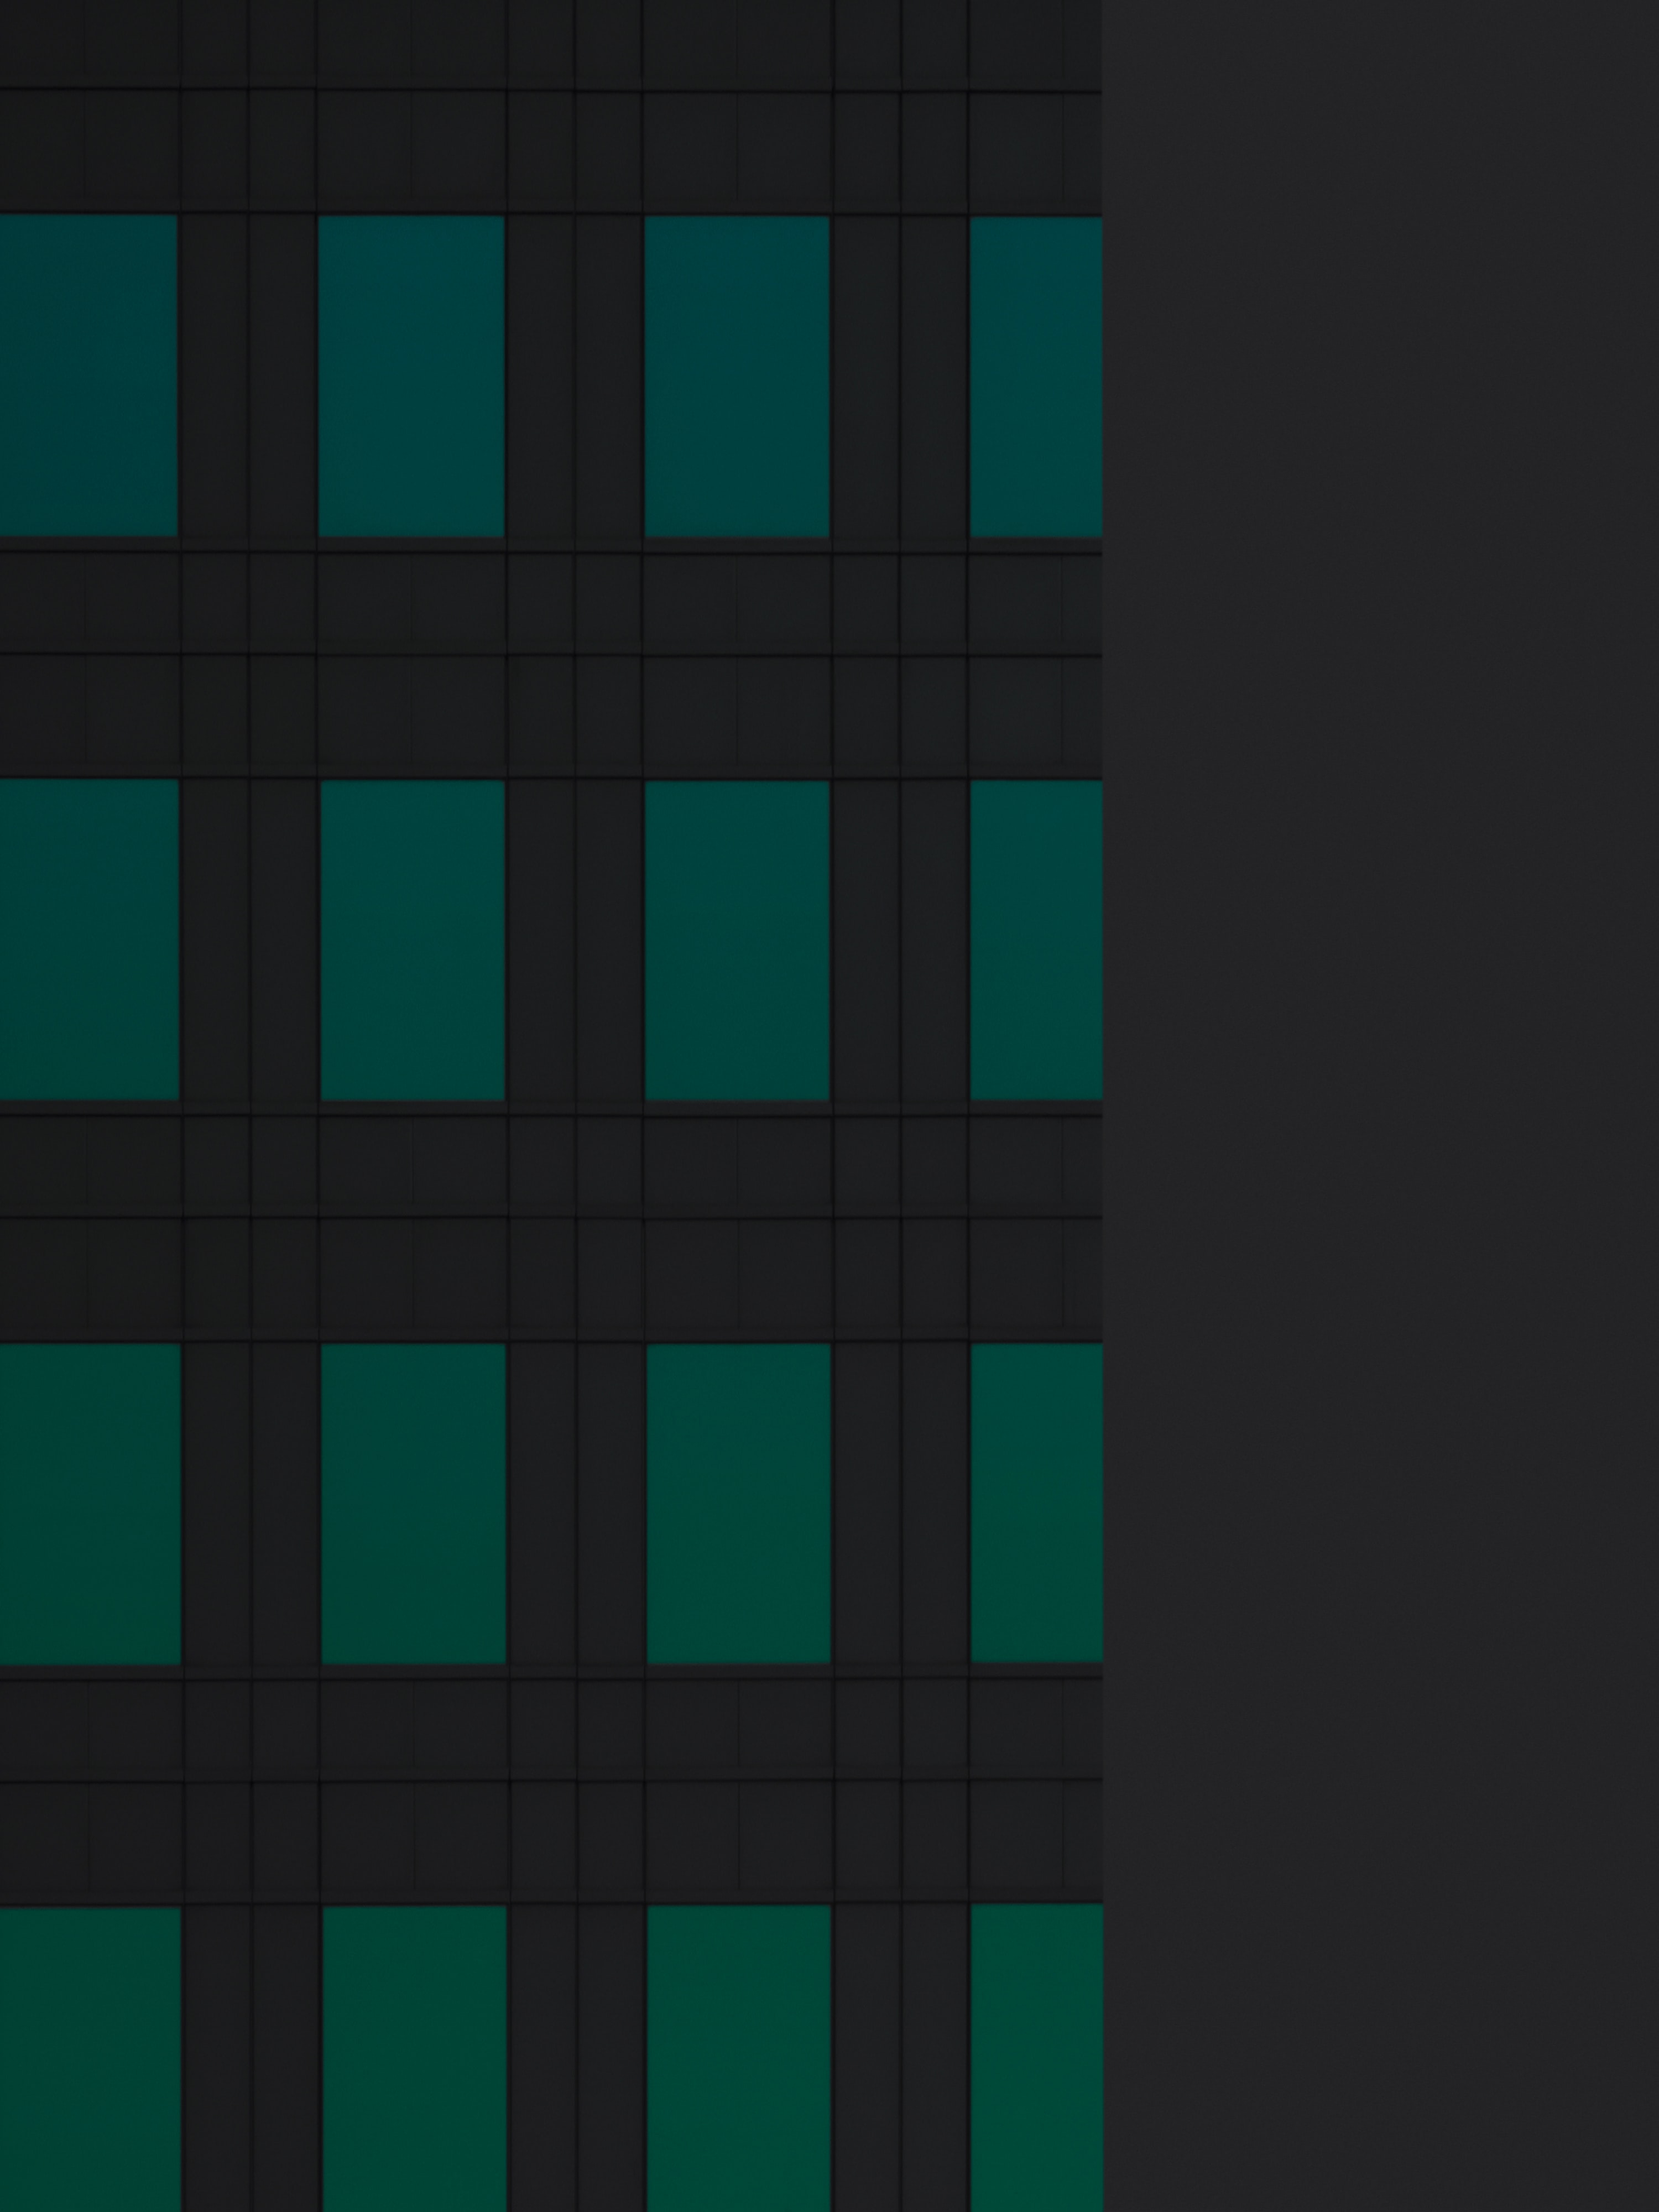 minimalism, rectangles, dark, facade Building HQ Background Images